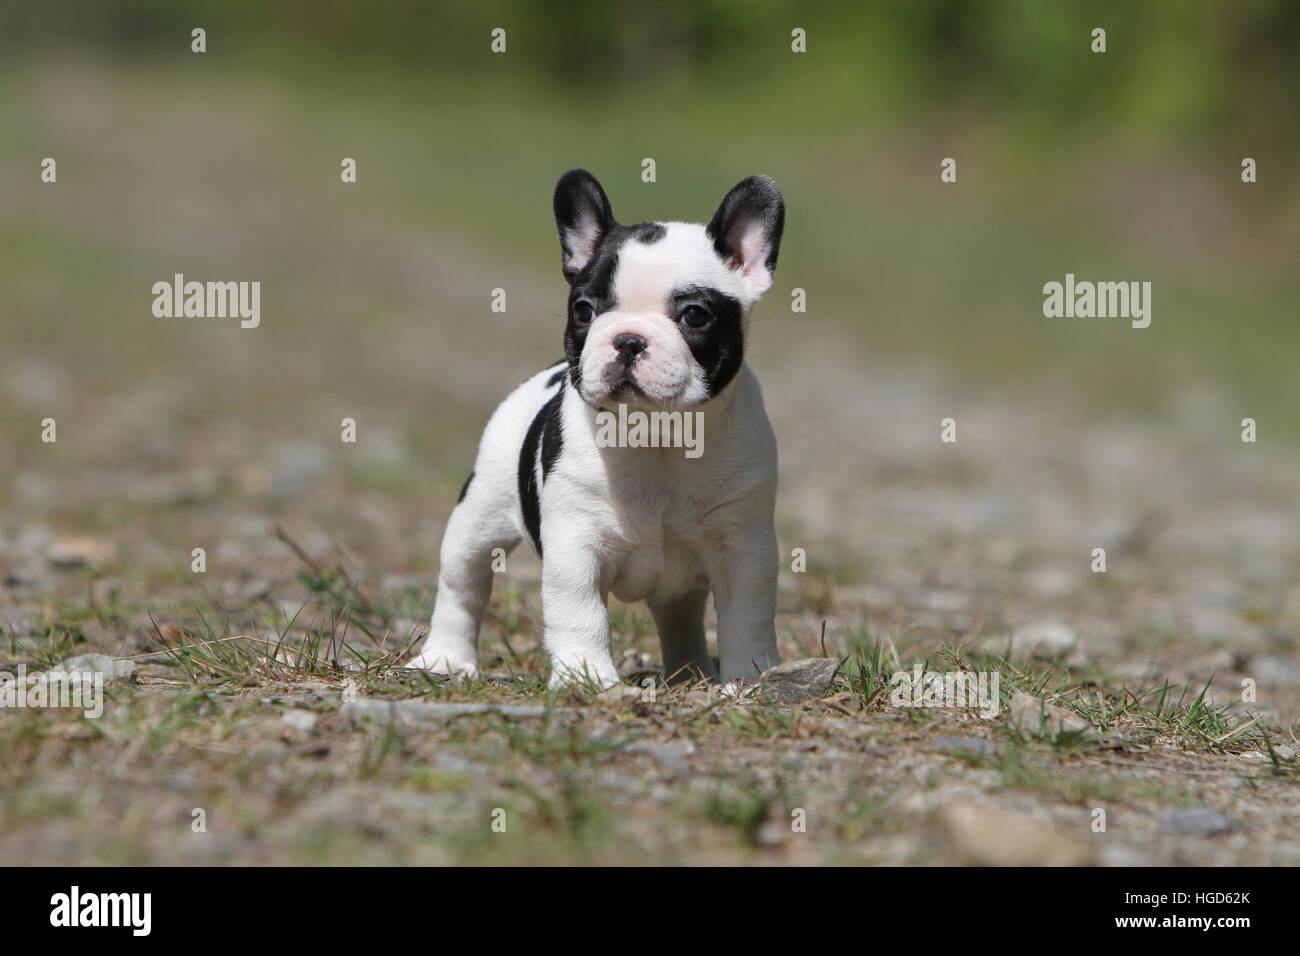 Dog French Bulldog / Bouledogue Français Pied puppy standing face black and  white Stock Photo - Alamy